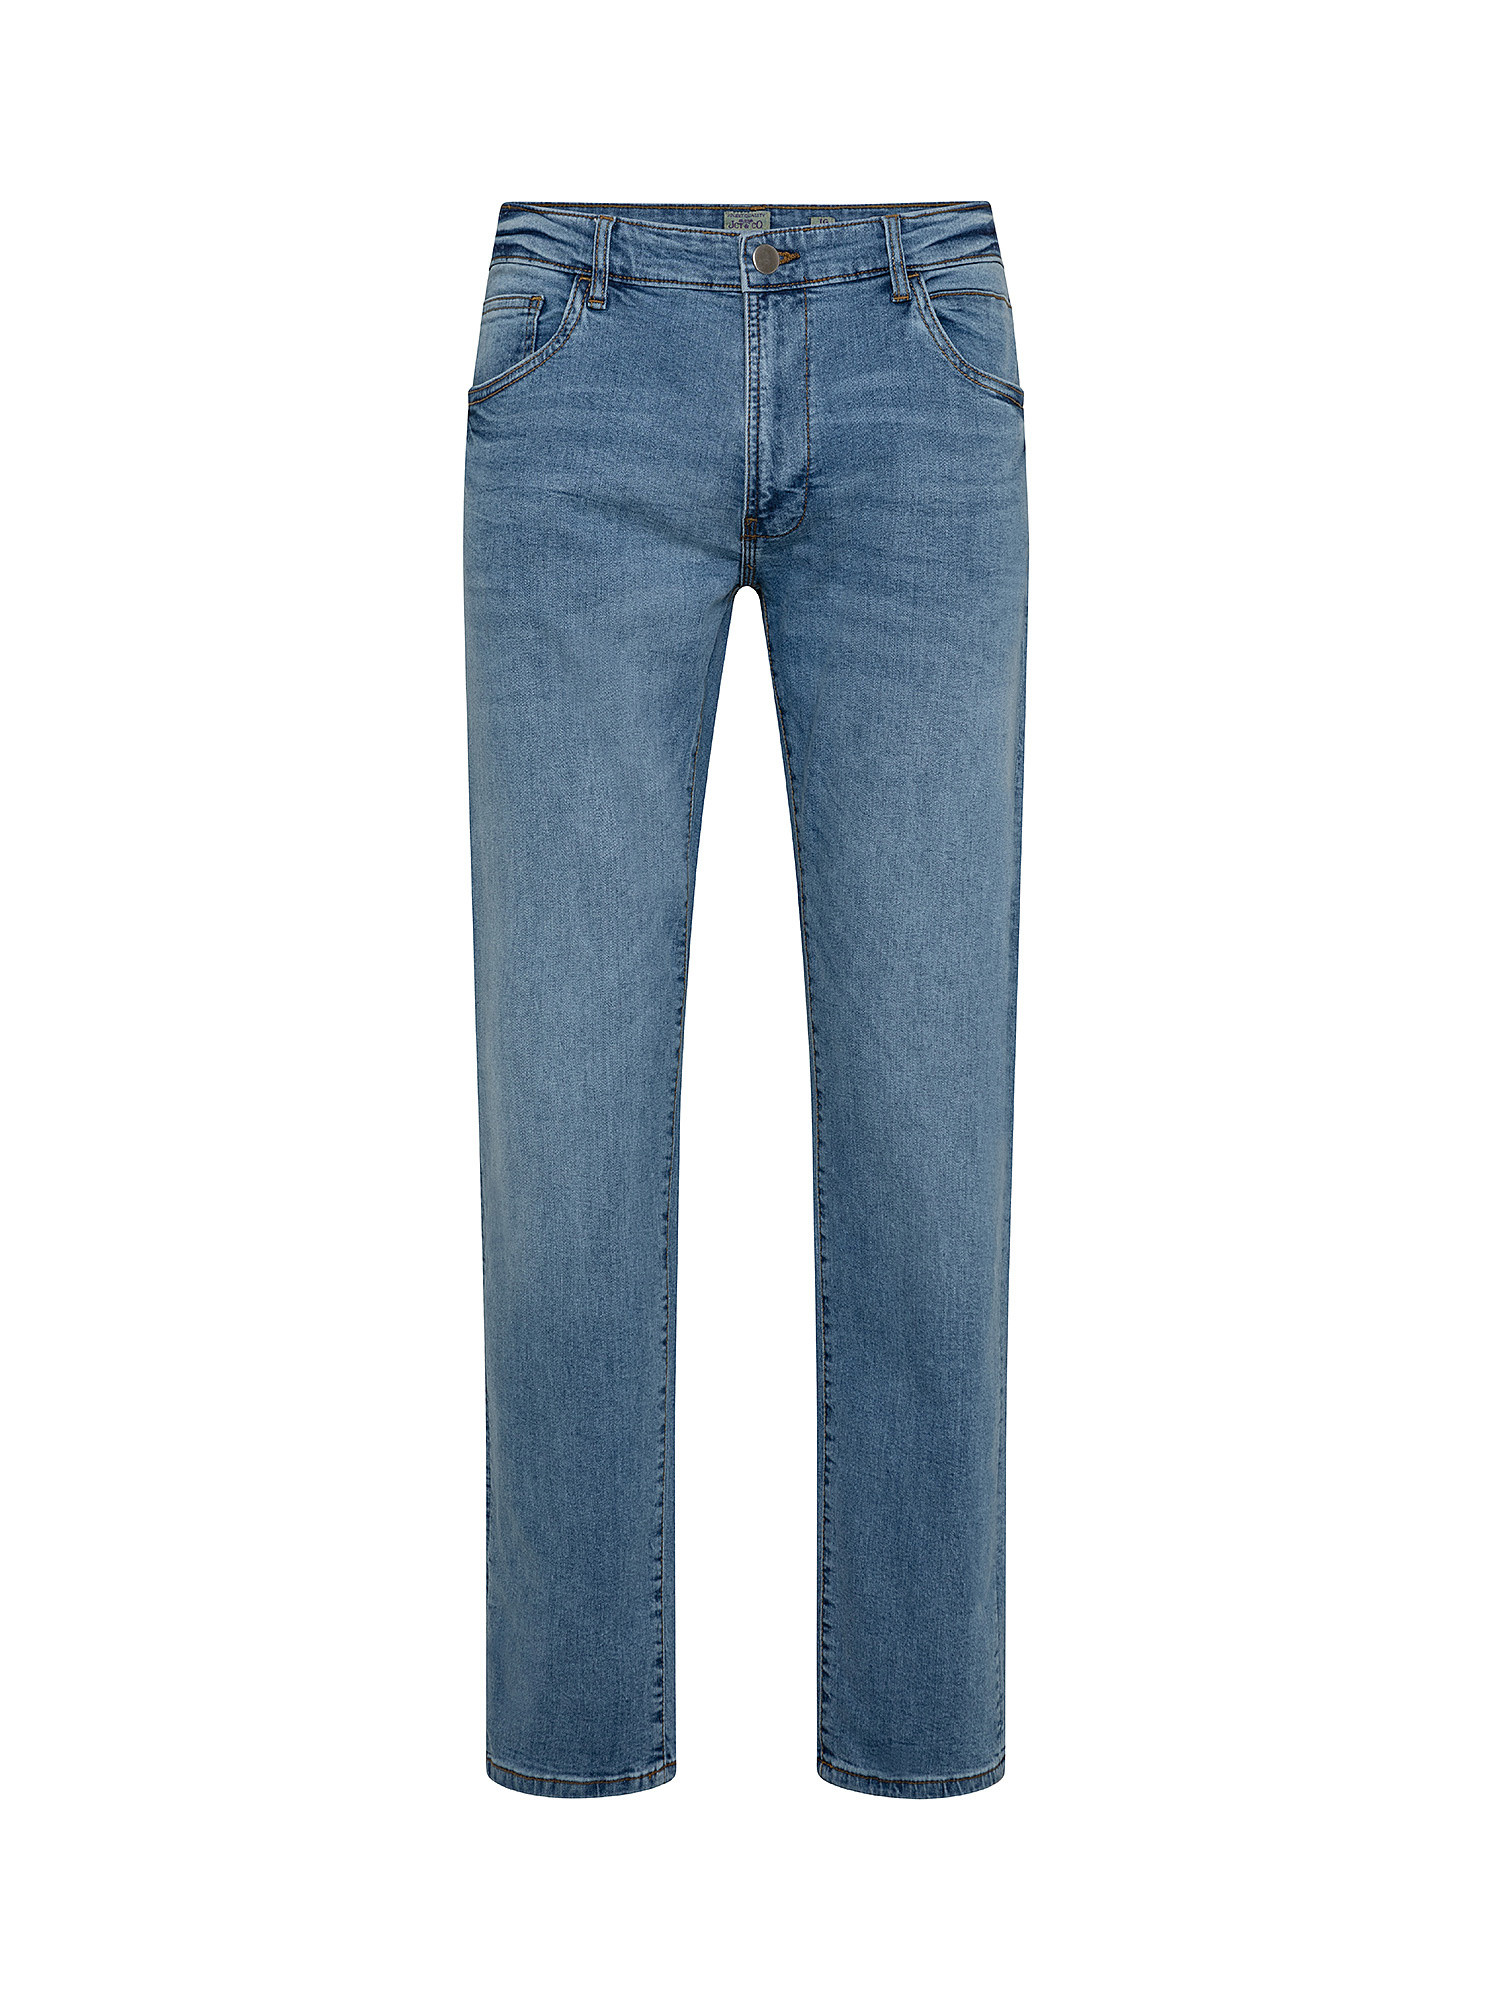 Jeans 5 tasche slim cotone stretch, Blu chiaro, large